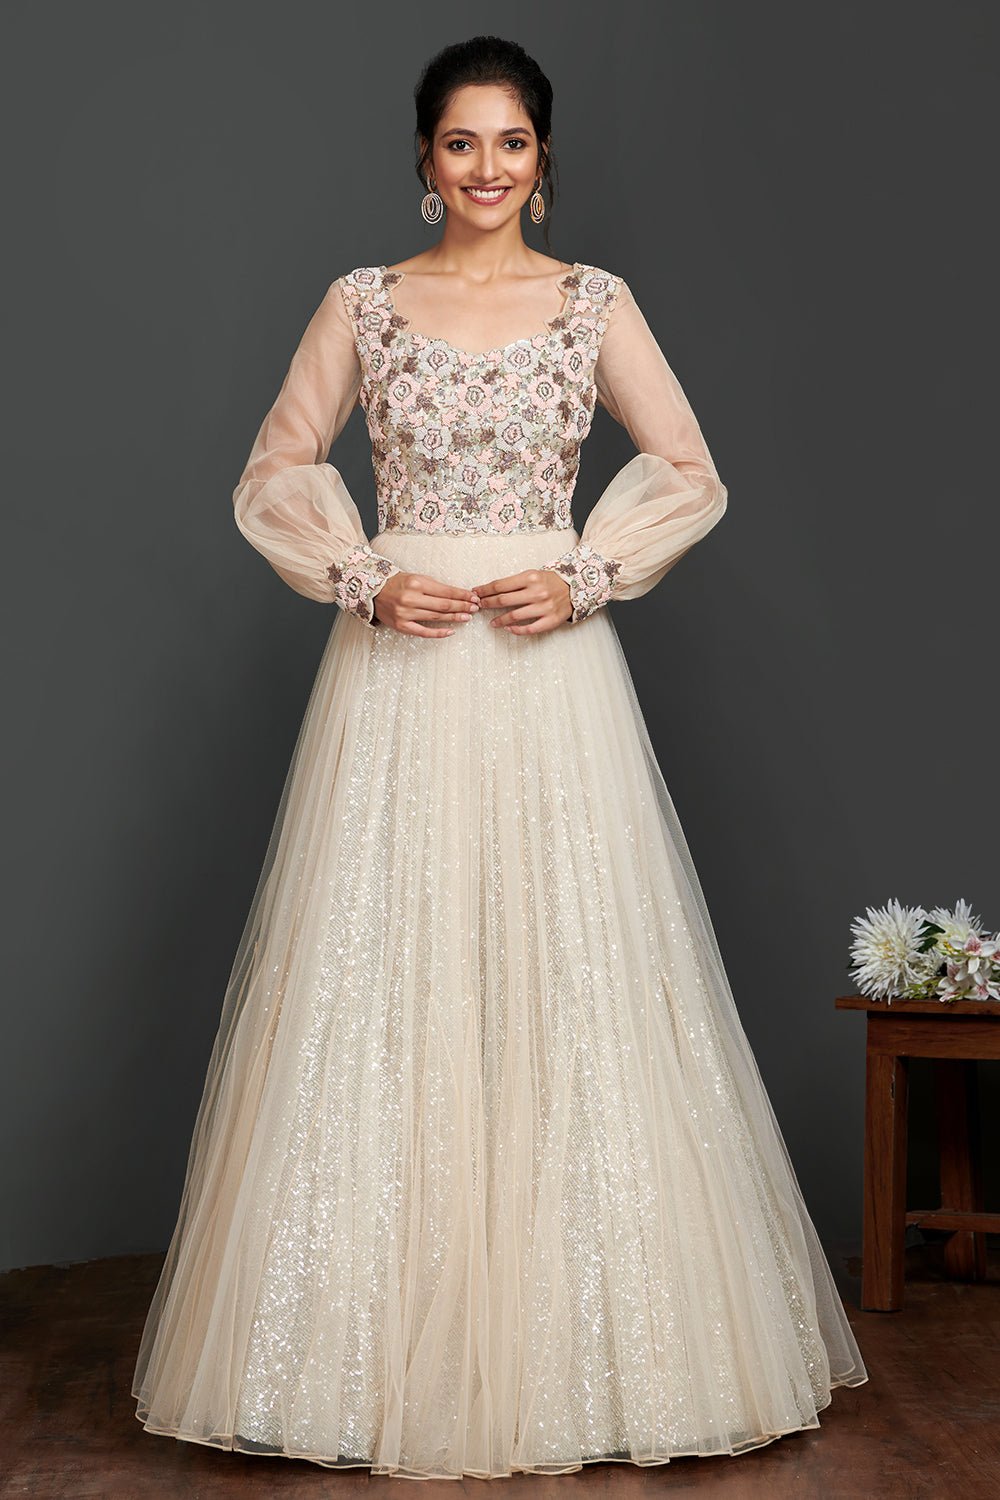 Off White Dresses - Buy Trendy Off White Dresses Online in India